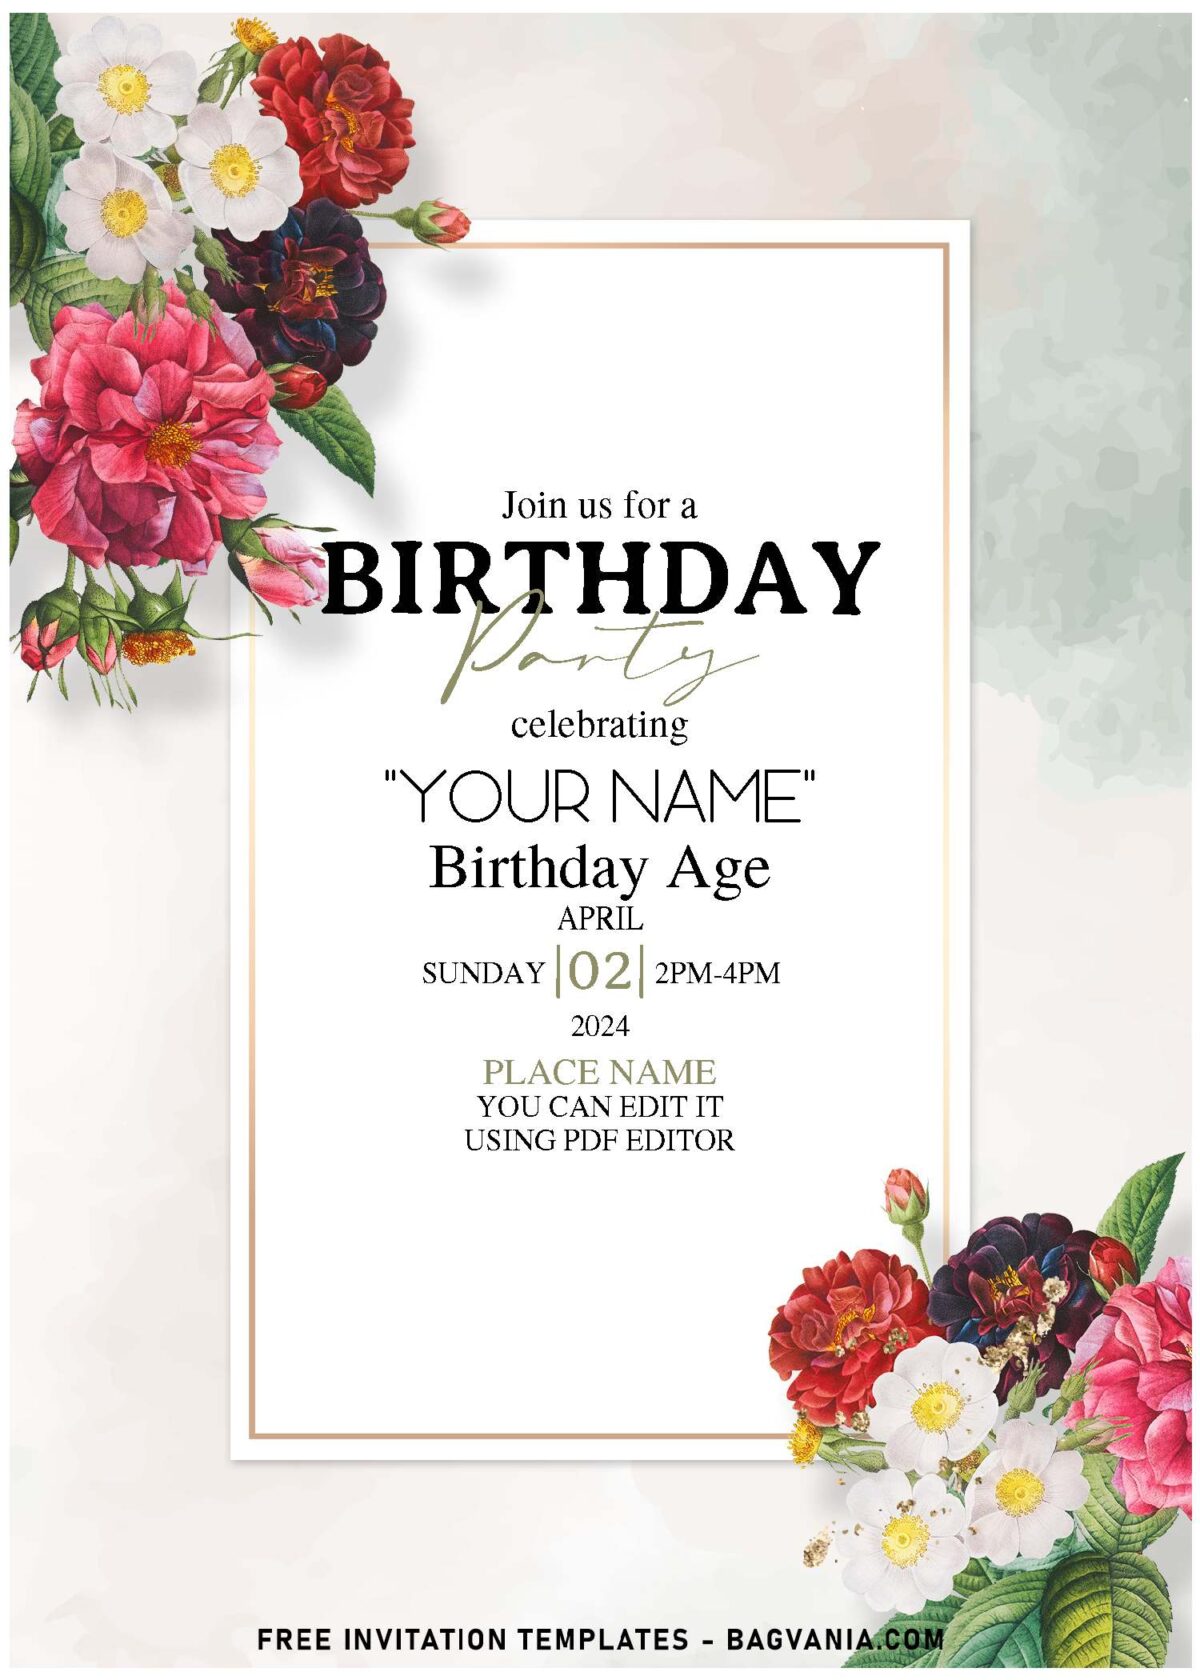 (Free Editable PDF) Dusty Bright And Moody Garden Rose Birthday Invitation Templates with elegant script